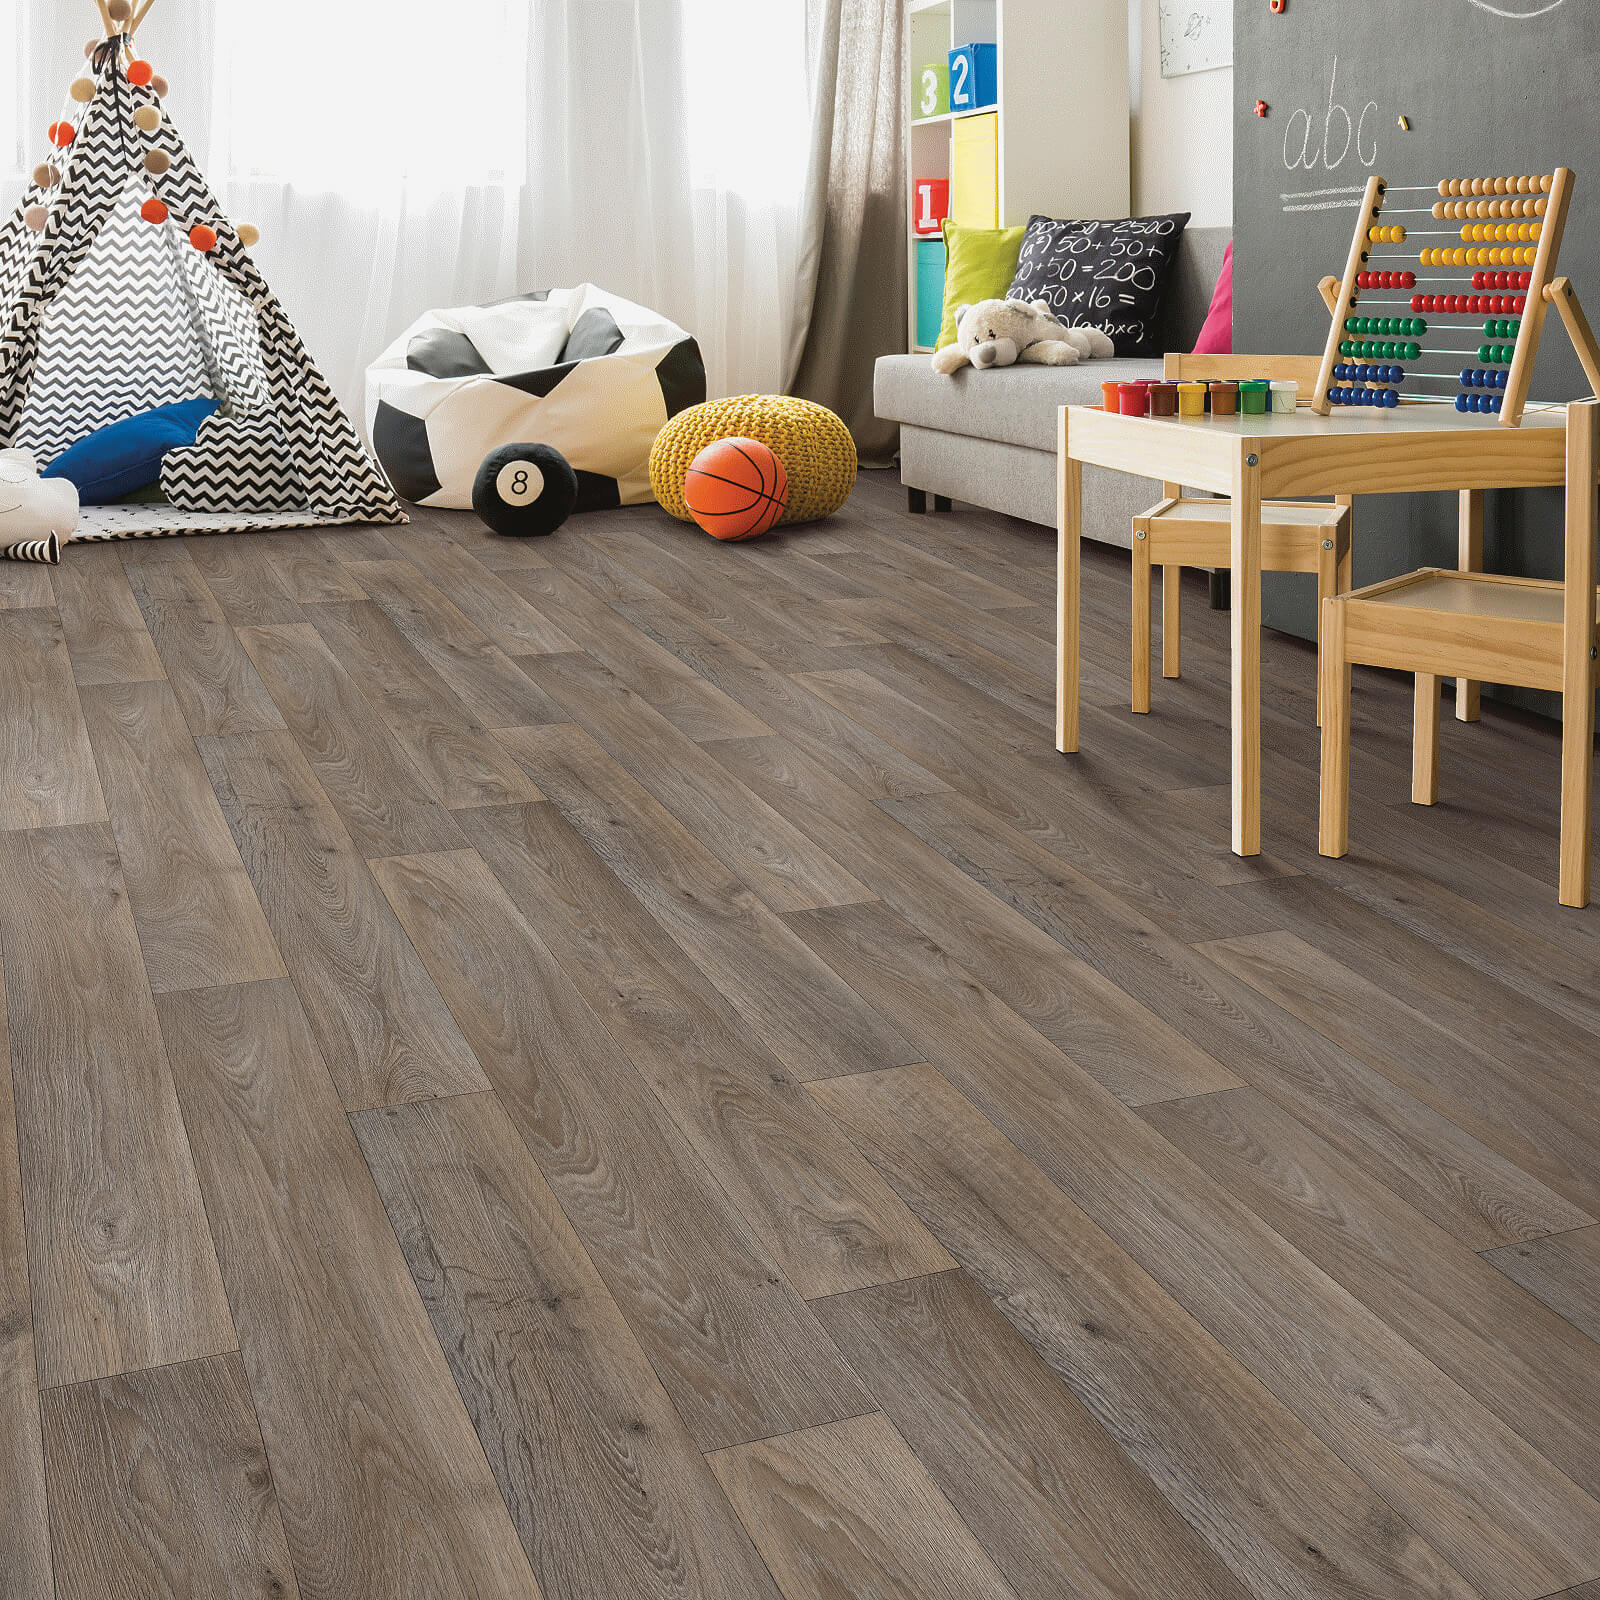 Kids room flooring | Mills Floor Covering